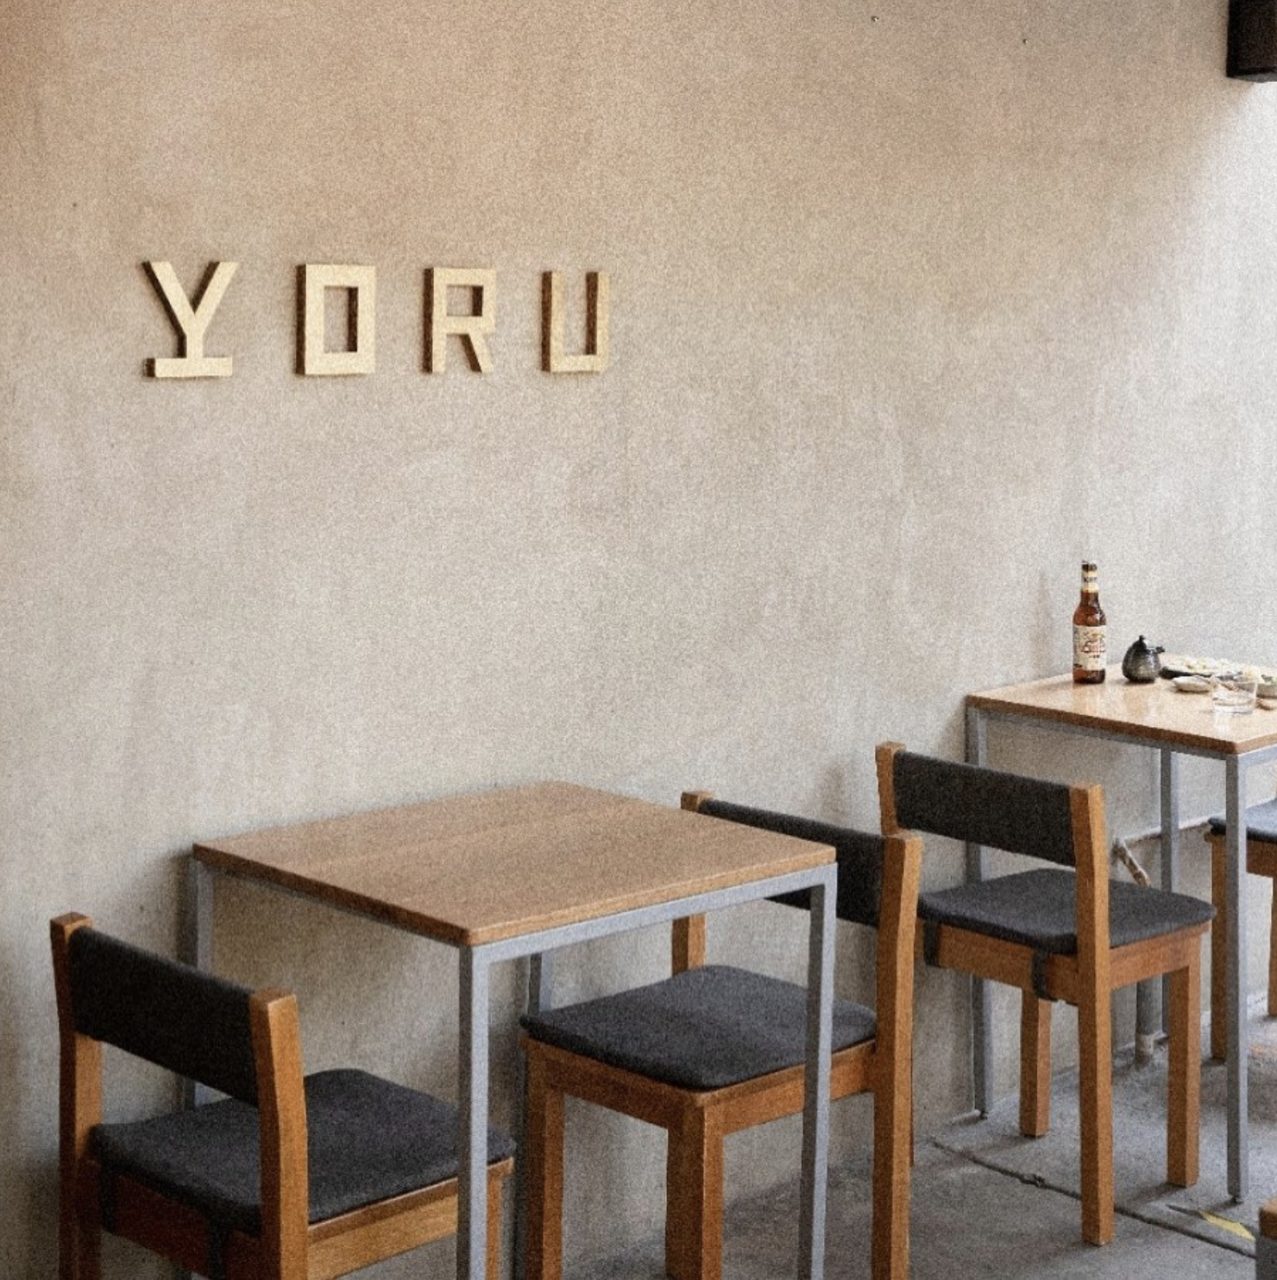 Yoru Handroll and Sushi Bar